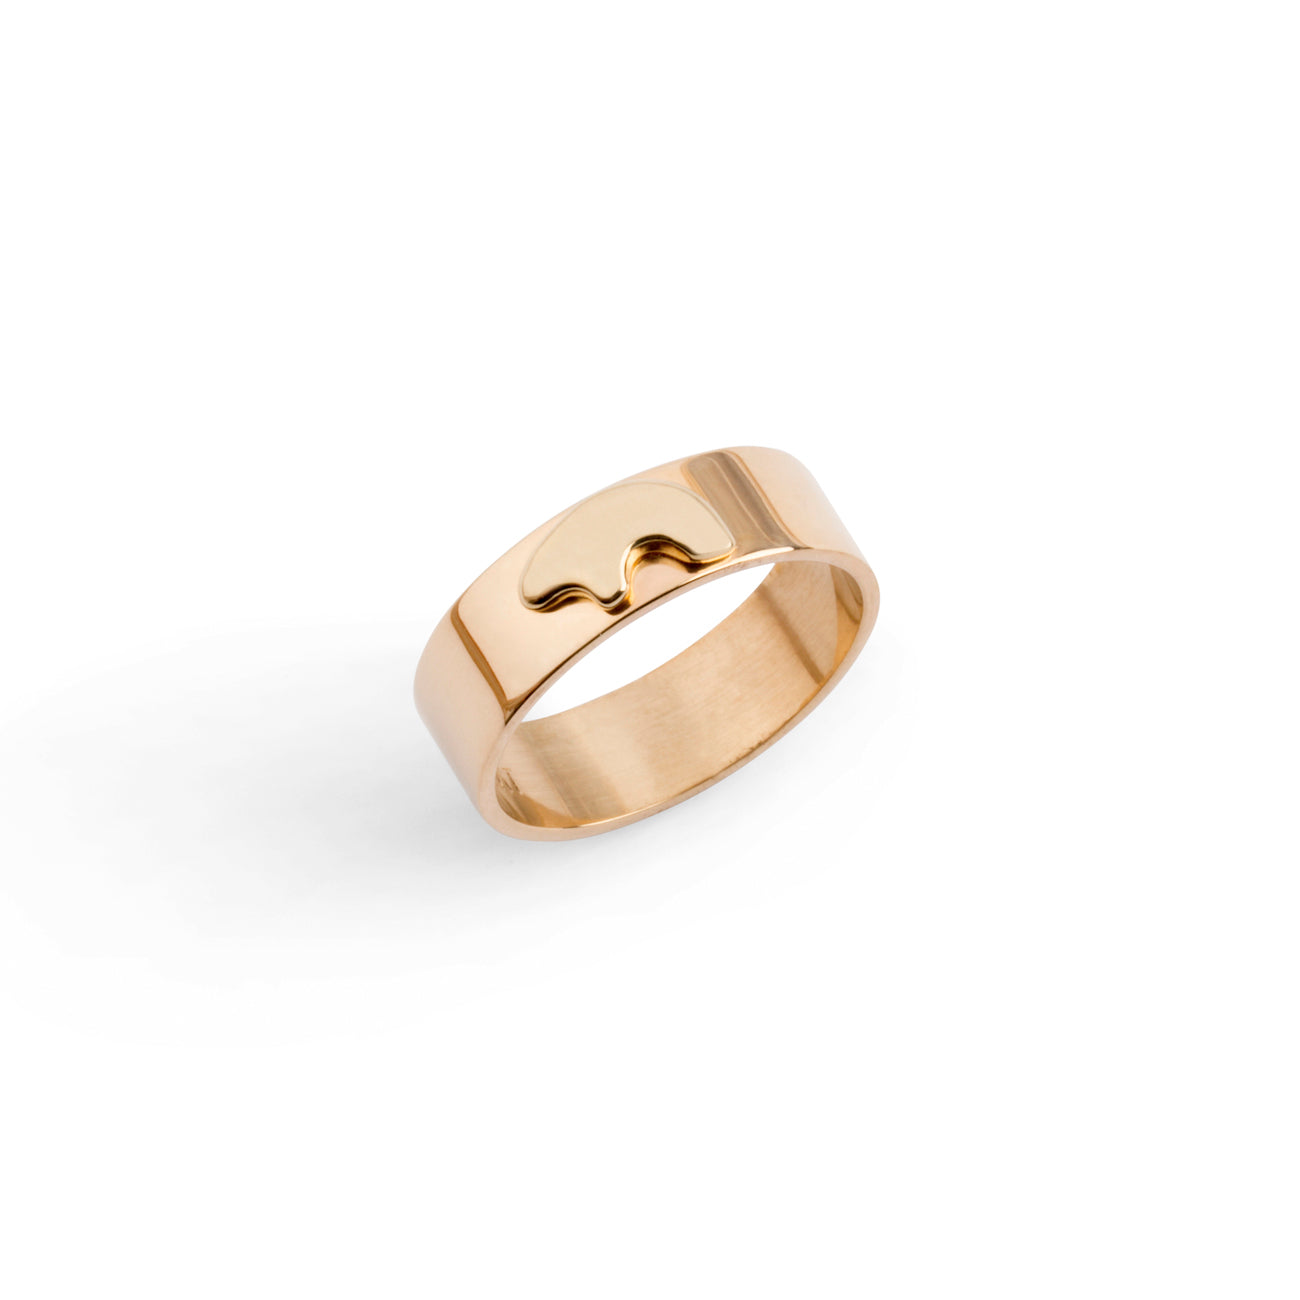 Louis Vuitton Nanogram Ring (Gold/Silver) - Size 6